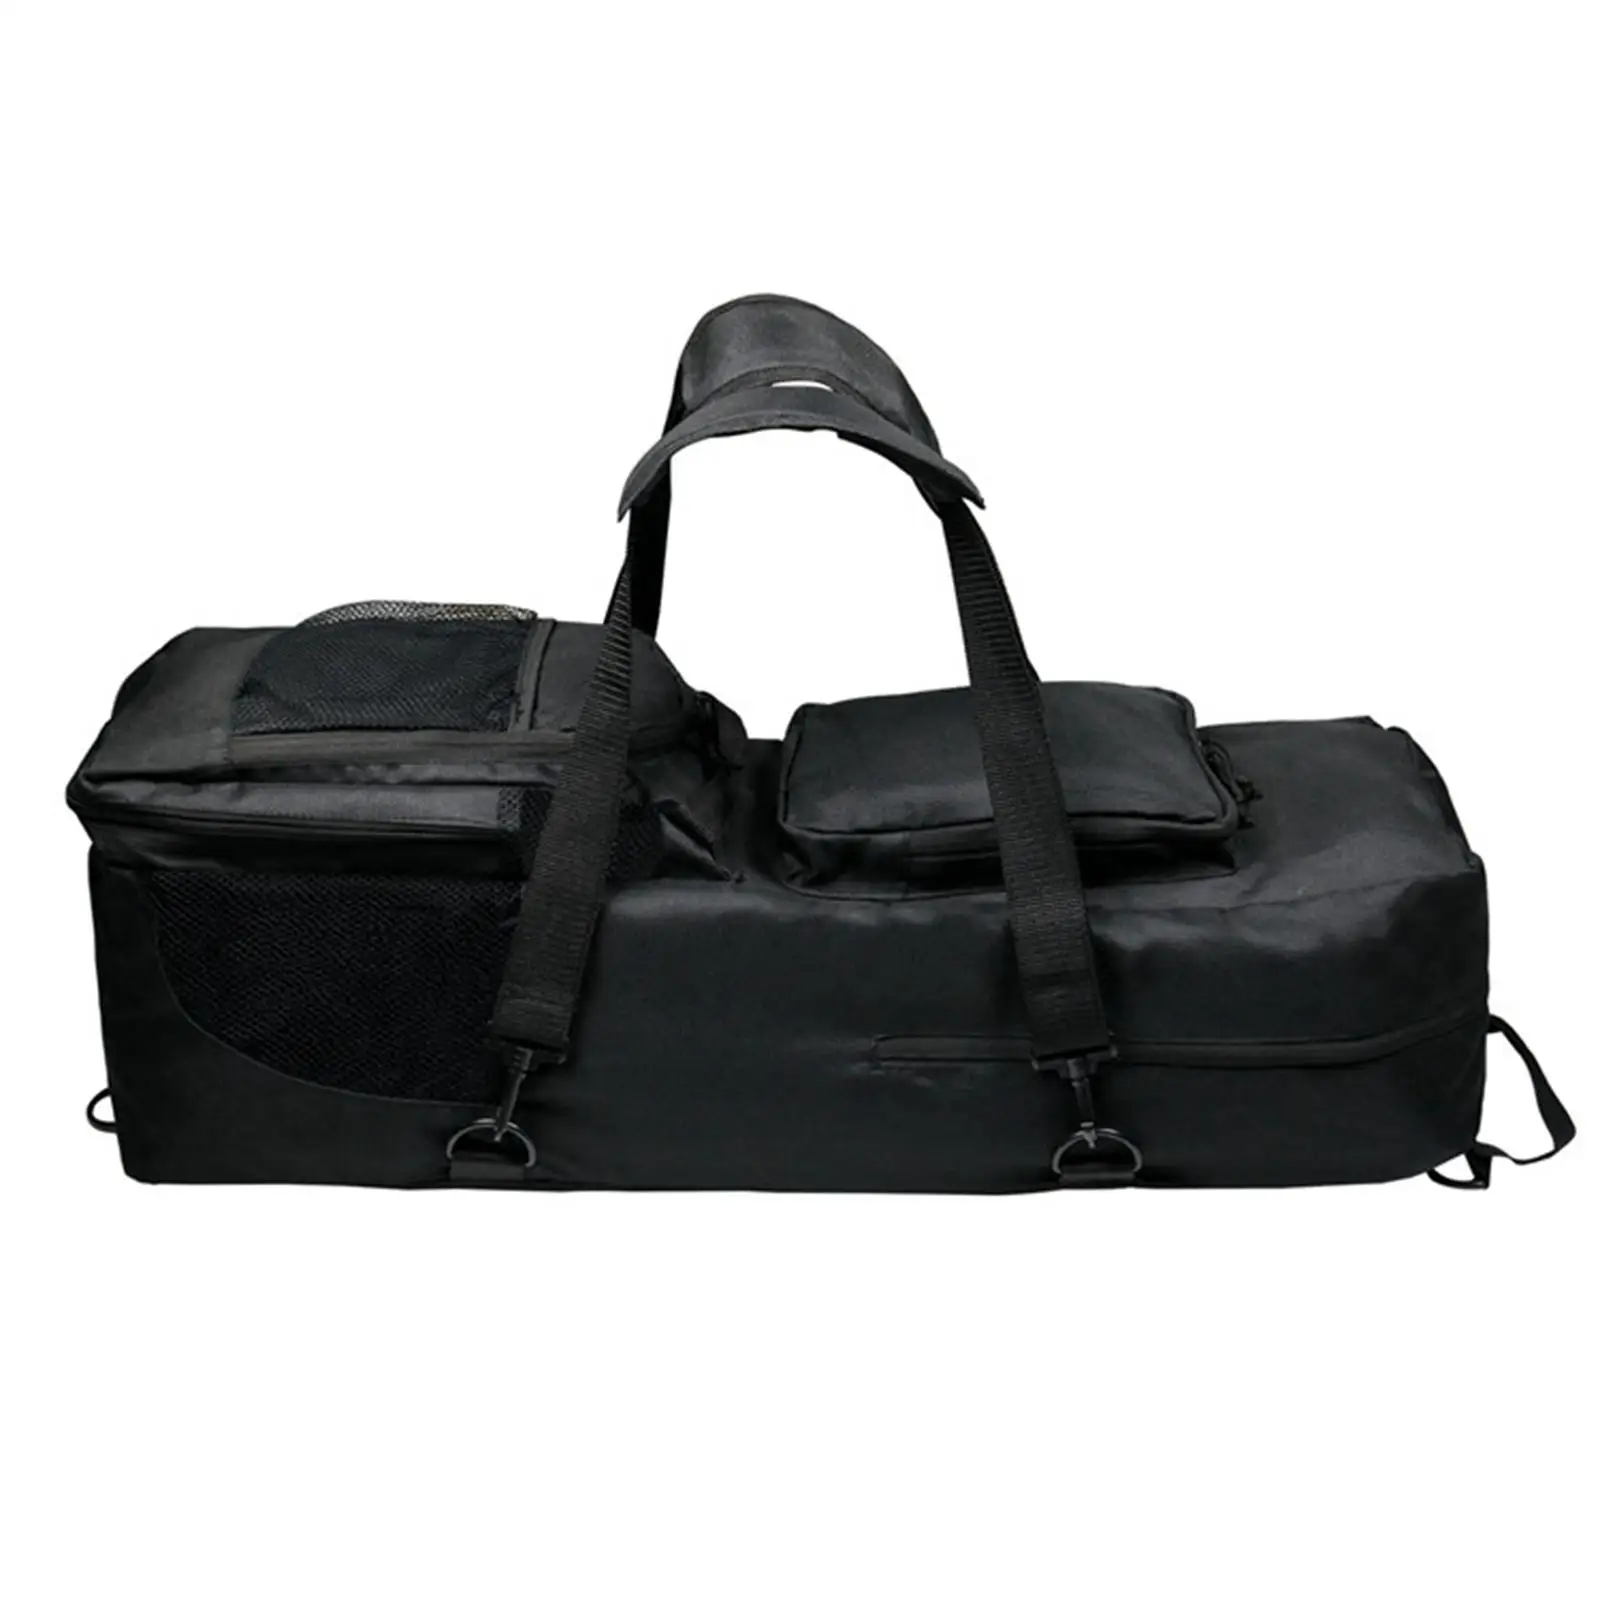 

Yoga Backpack Bag Lightweight Travel Duffel Bag Storage Bag Multi Pocket Durable Gym Duffle Bag for Exercise Outdoor Office Home